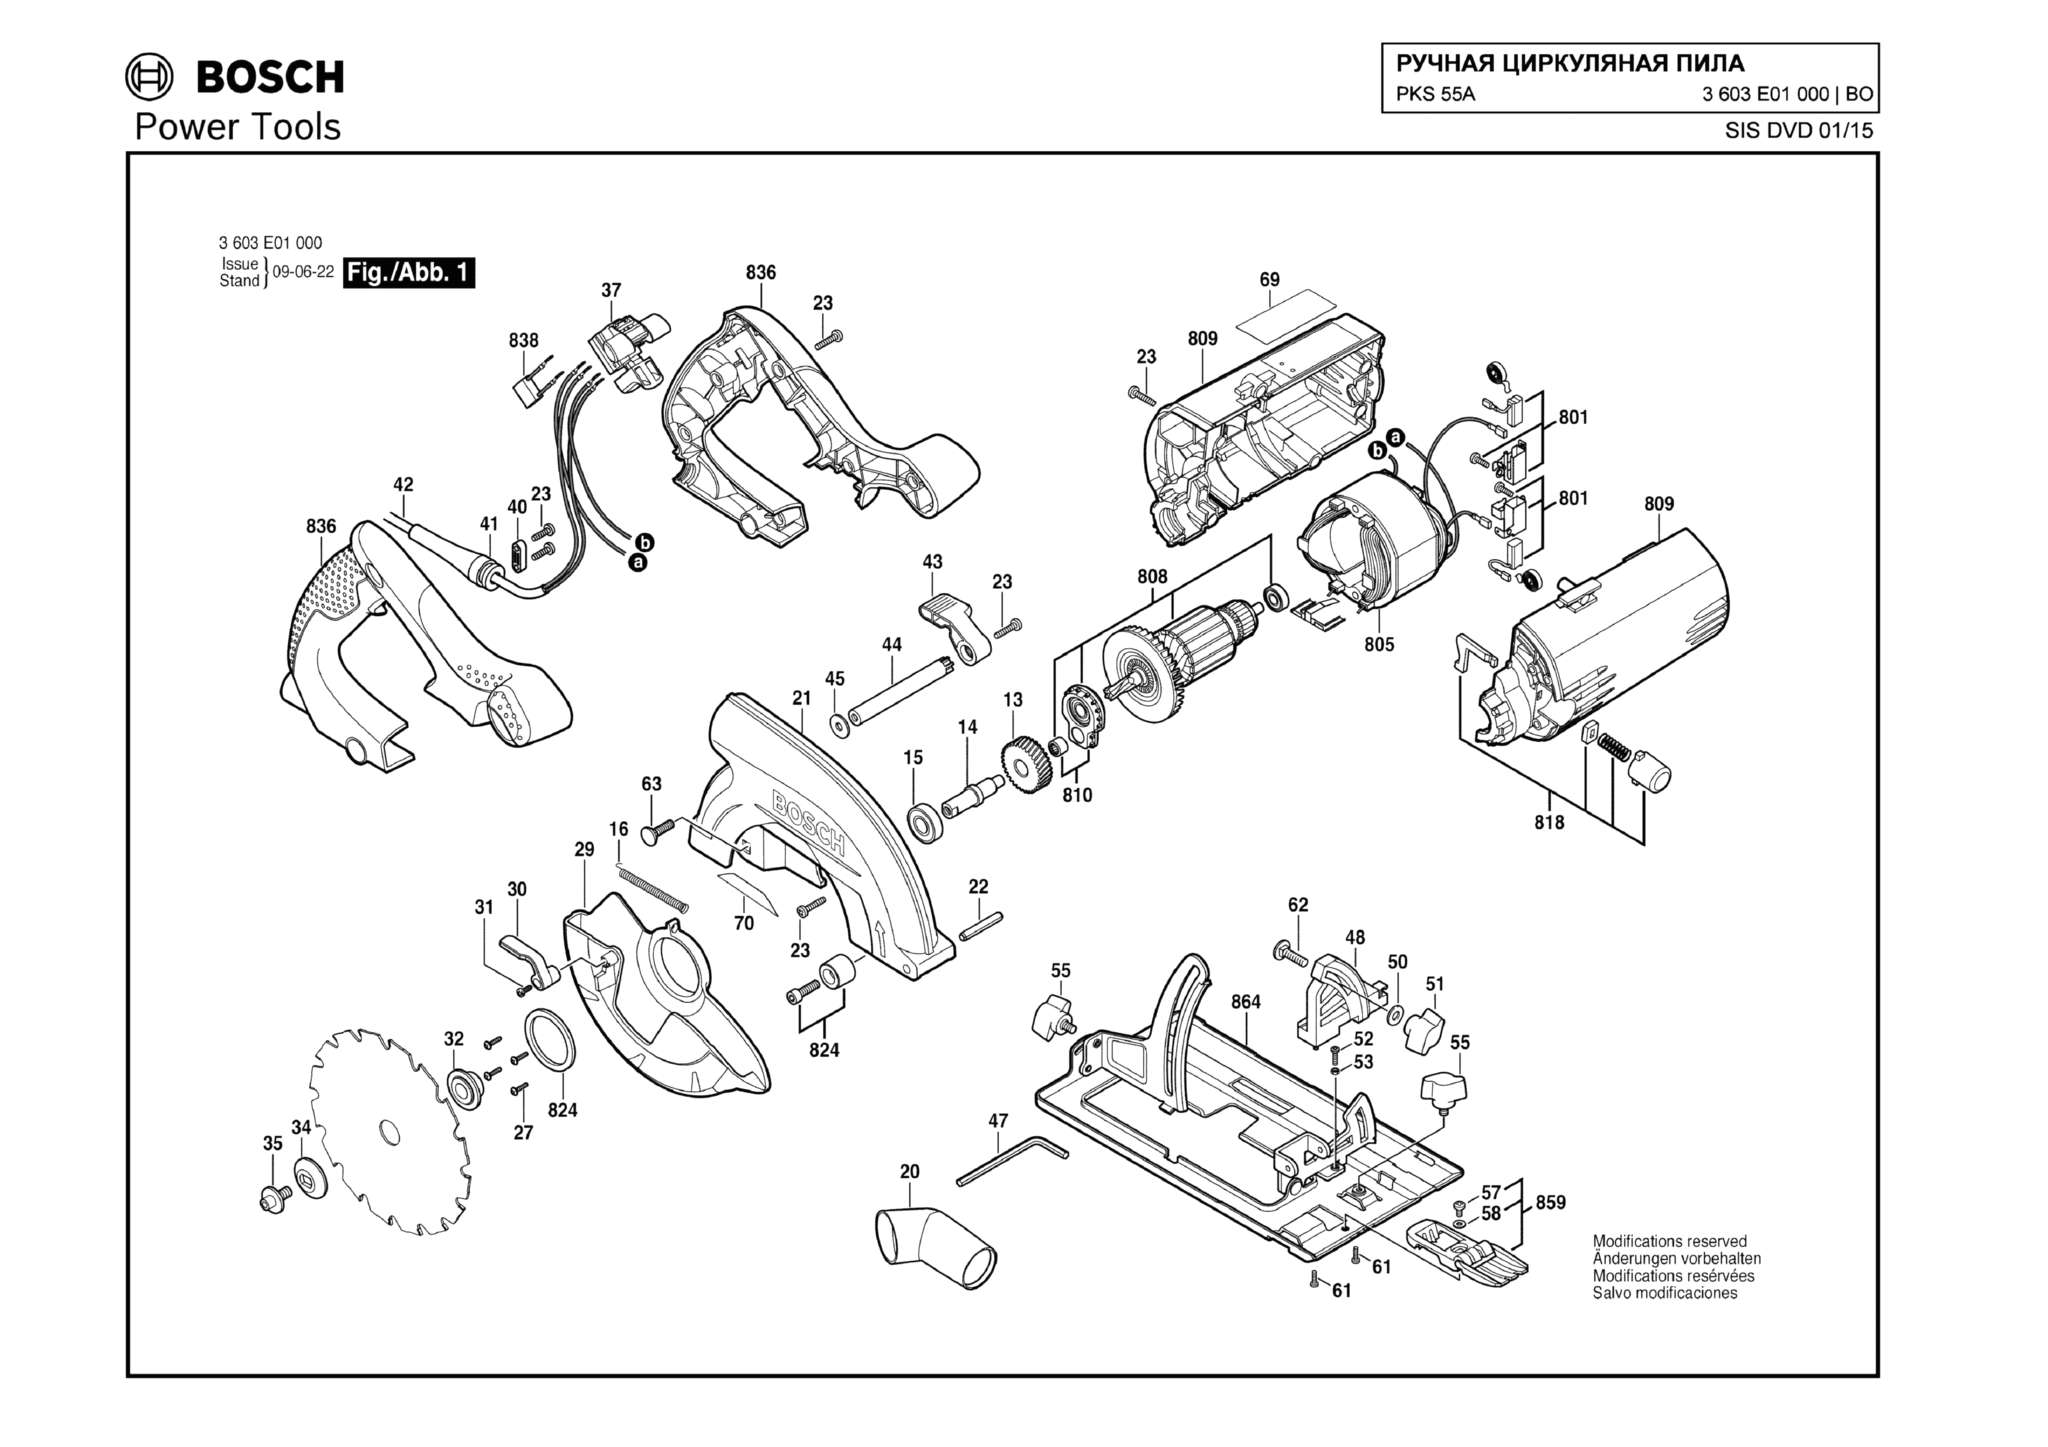 Запчасти, схема и деталировка Bosch PKS 55A (ТИП 3603E01000)